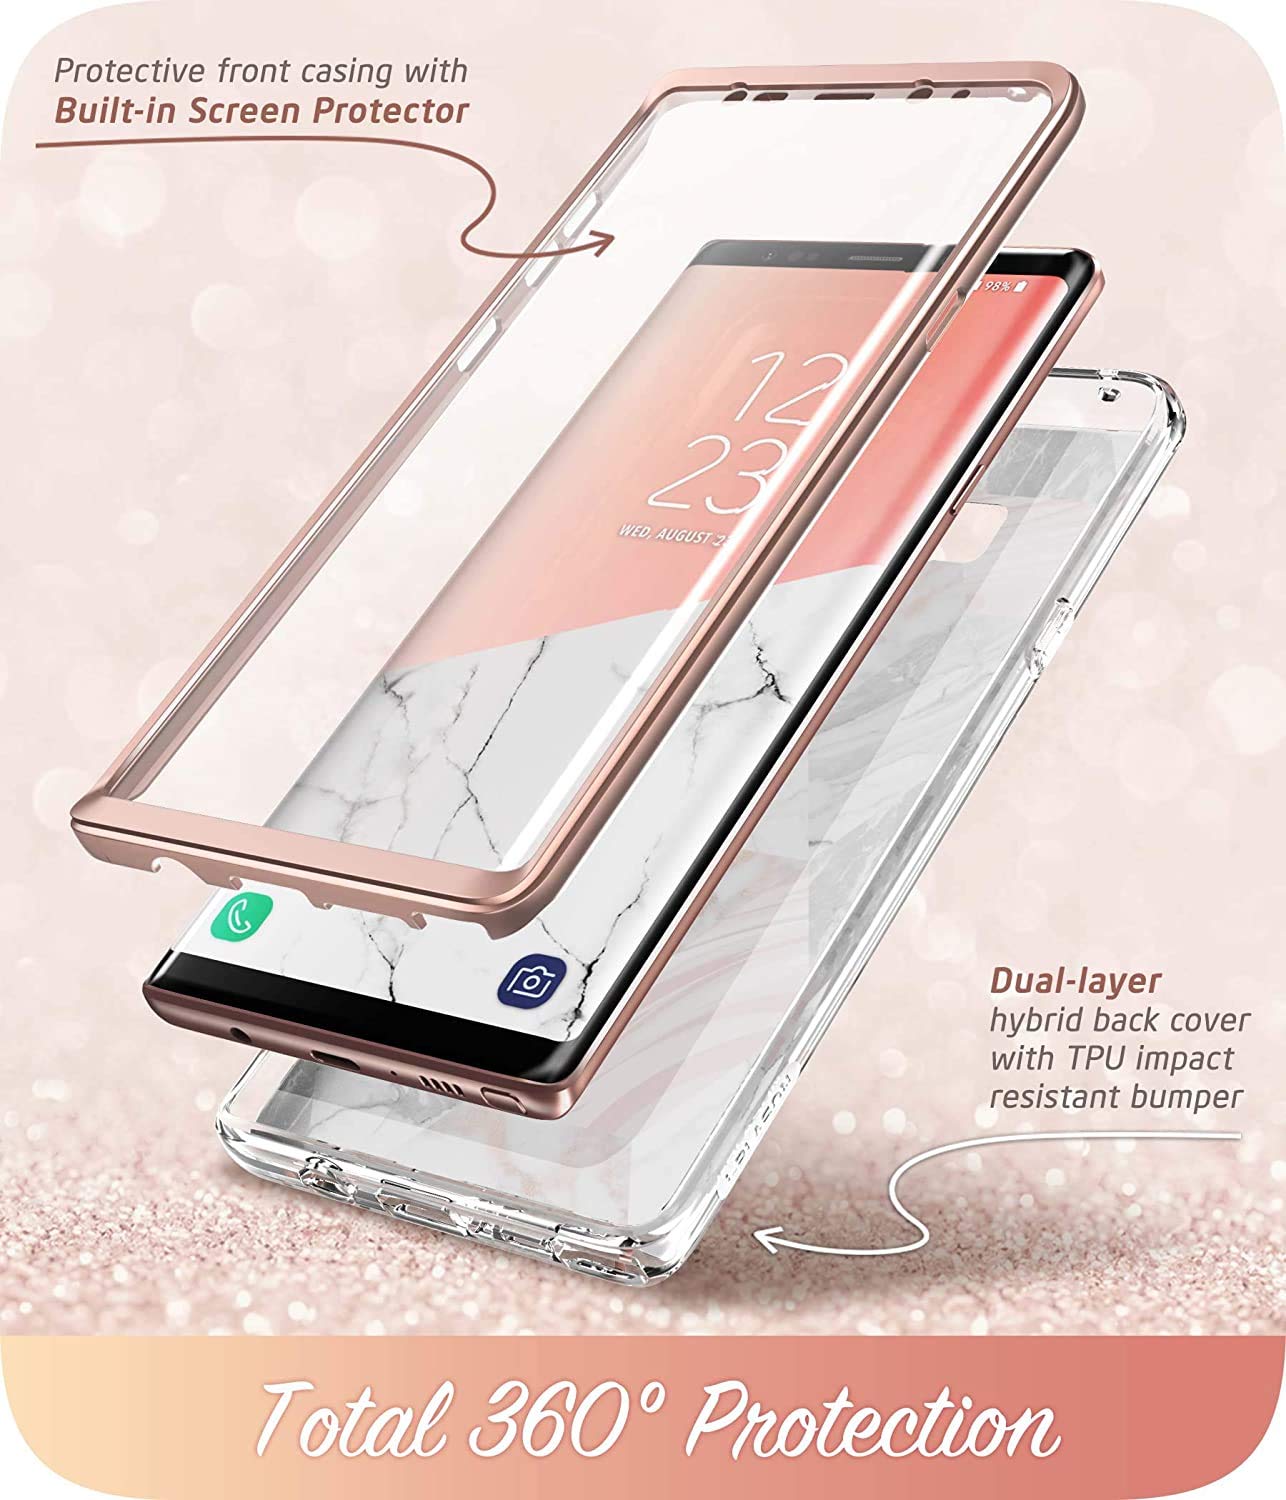 i-Blason Cosmo Full-Body Bumper Protective Case for Galaxy Note 9 2018 Release, Marble